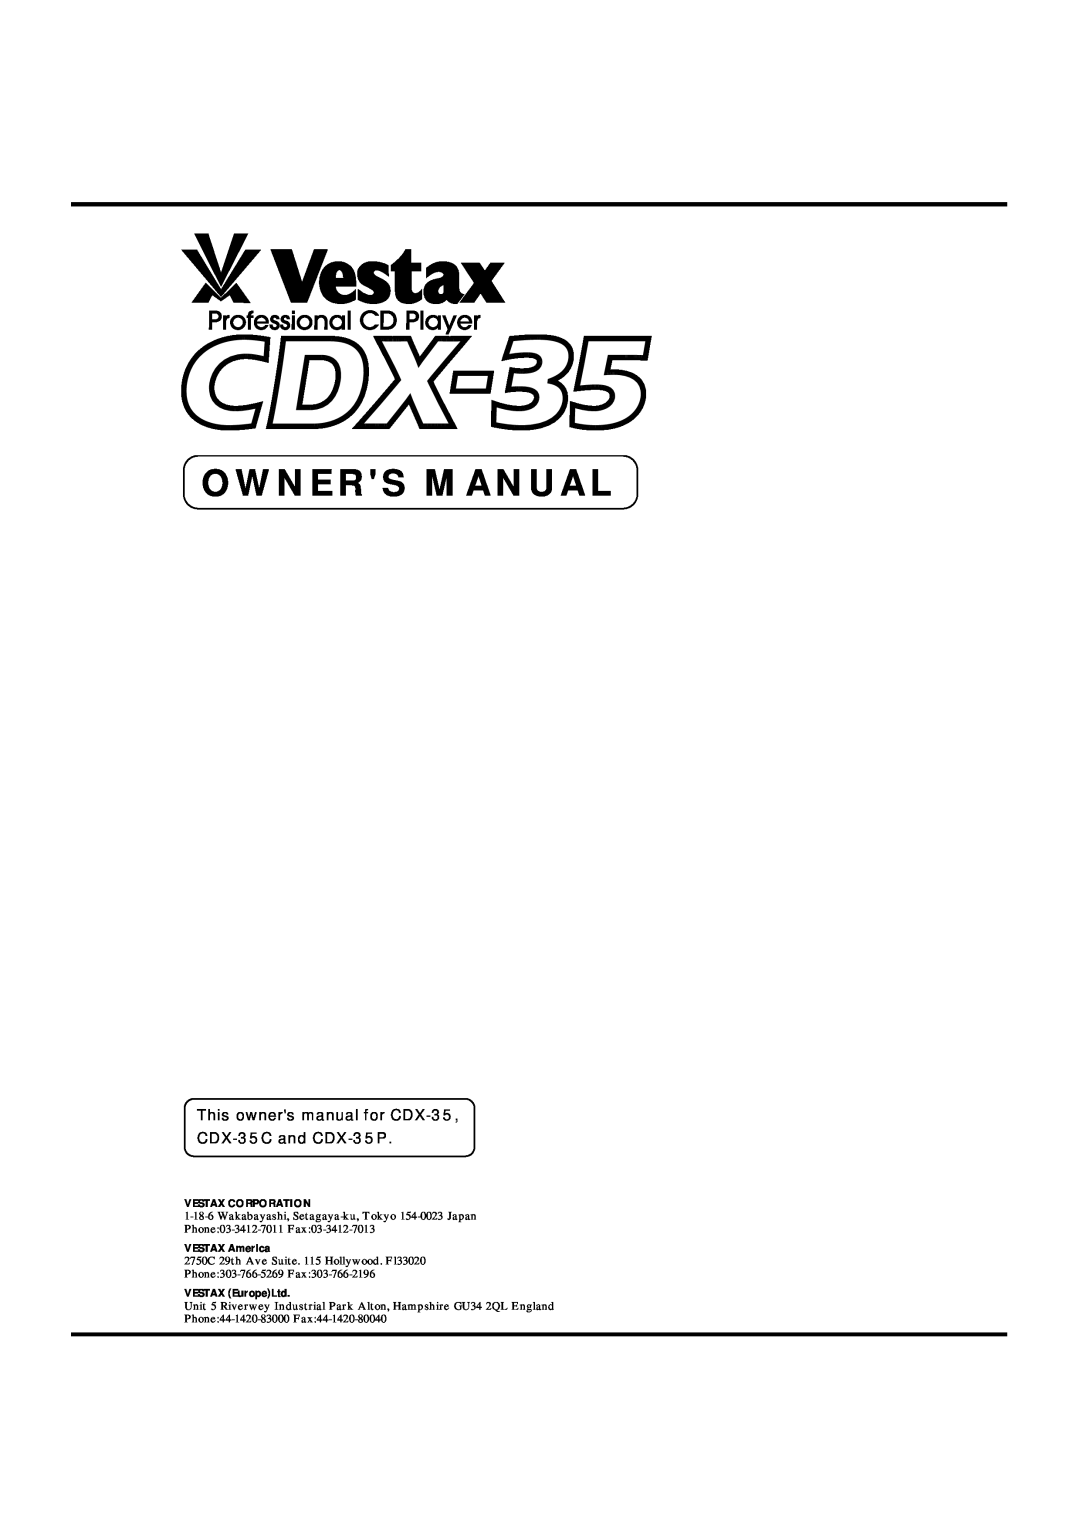 Vestax CDX-35C, CDX-35P owner manual Vestax Corporation, VESTAX America 